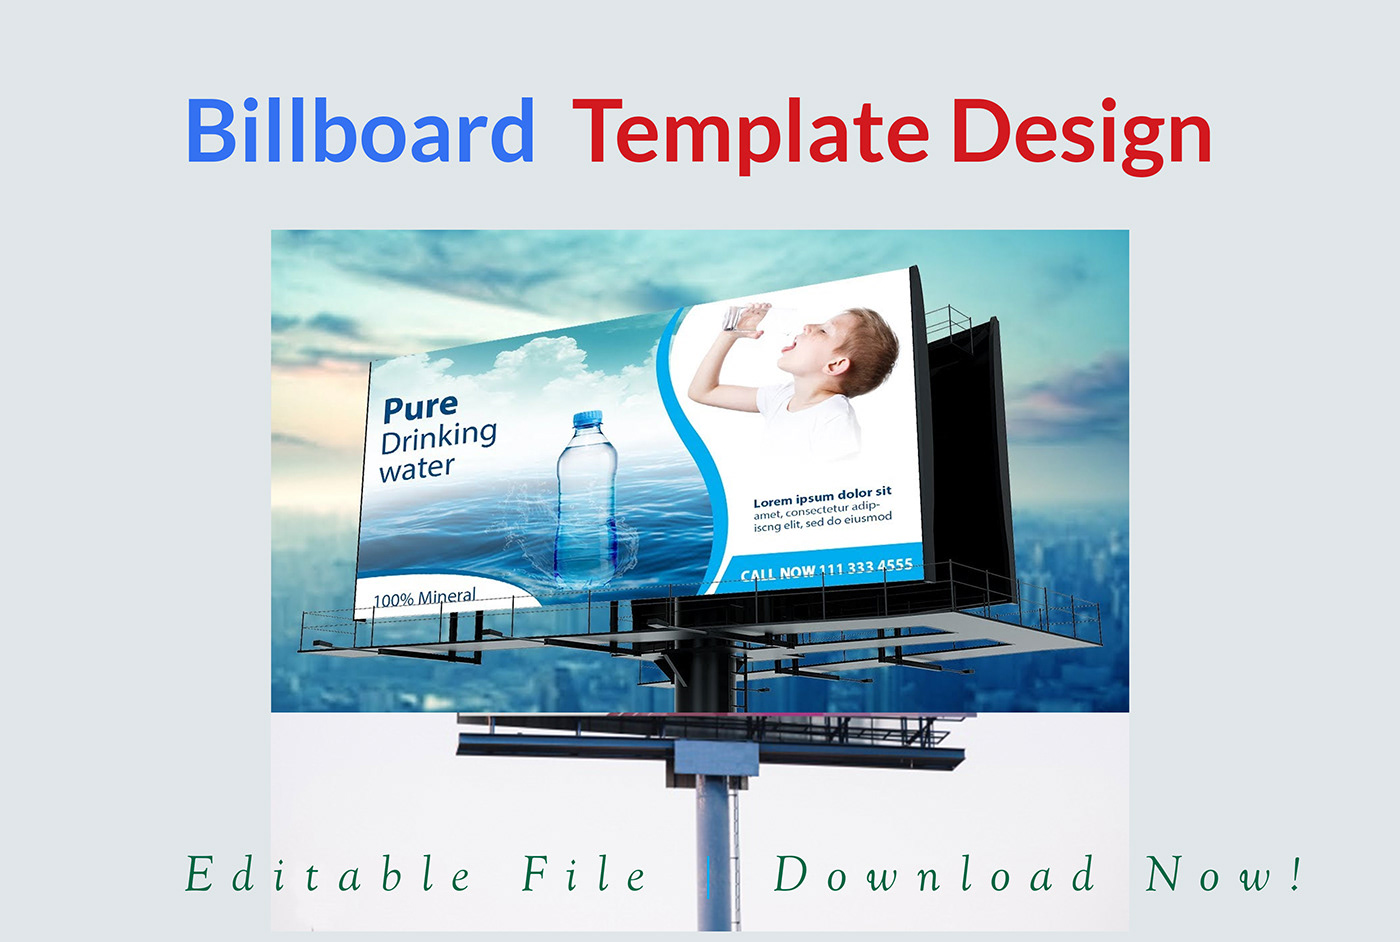 Billboard Template Design